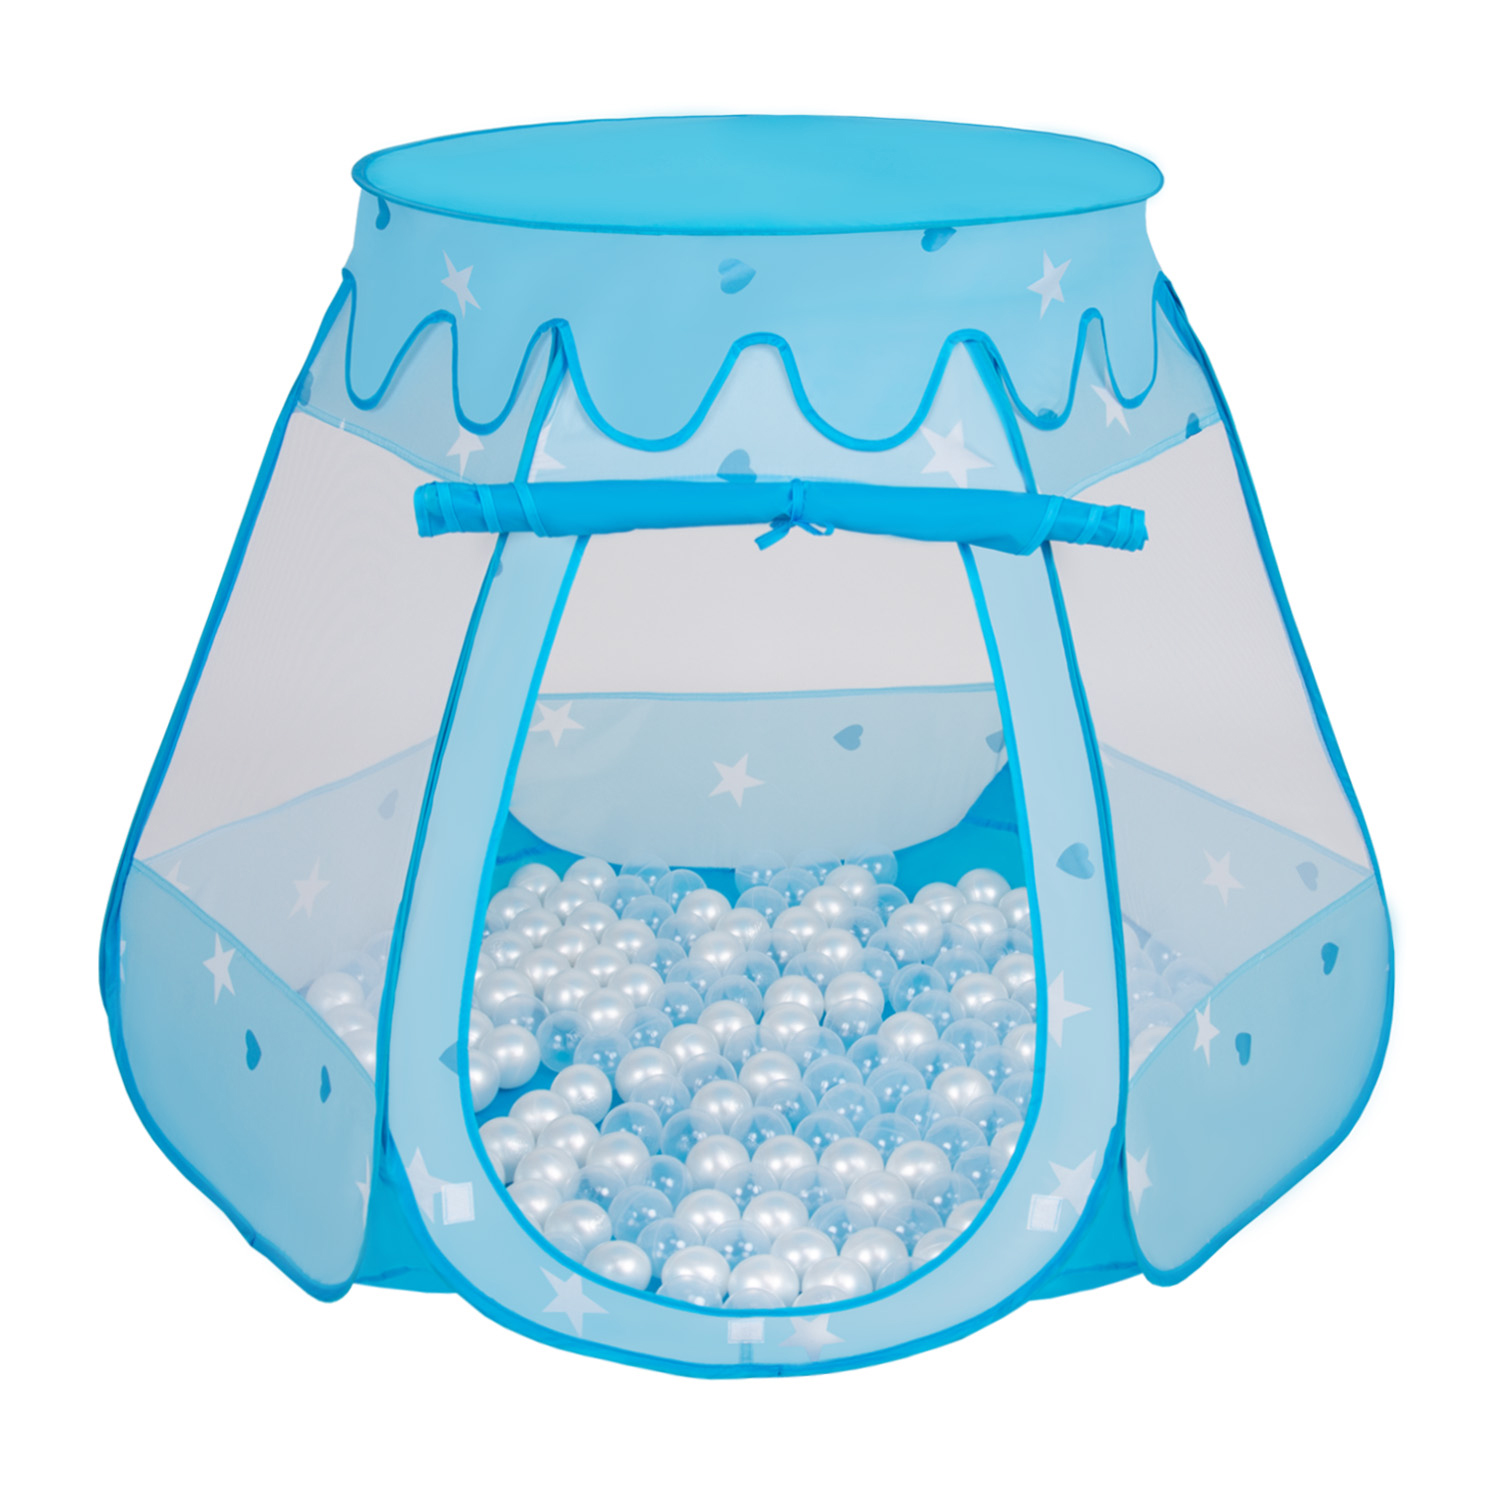 HSM Pop Up Bällebad mit 100 Bällen Spielhaus Kinderzelt Spielzelt Babypool Blau 